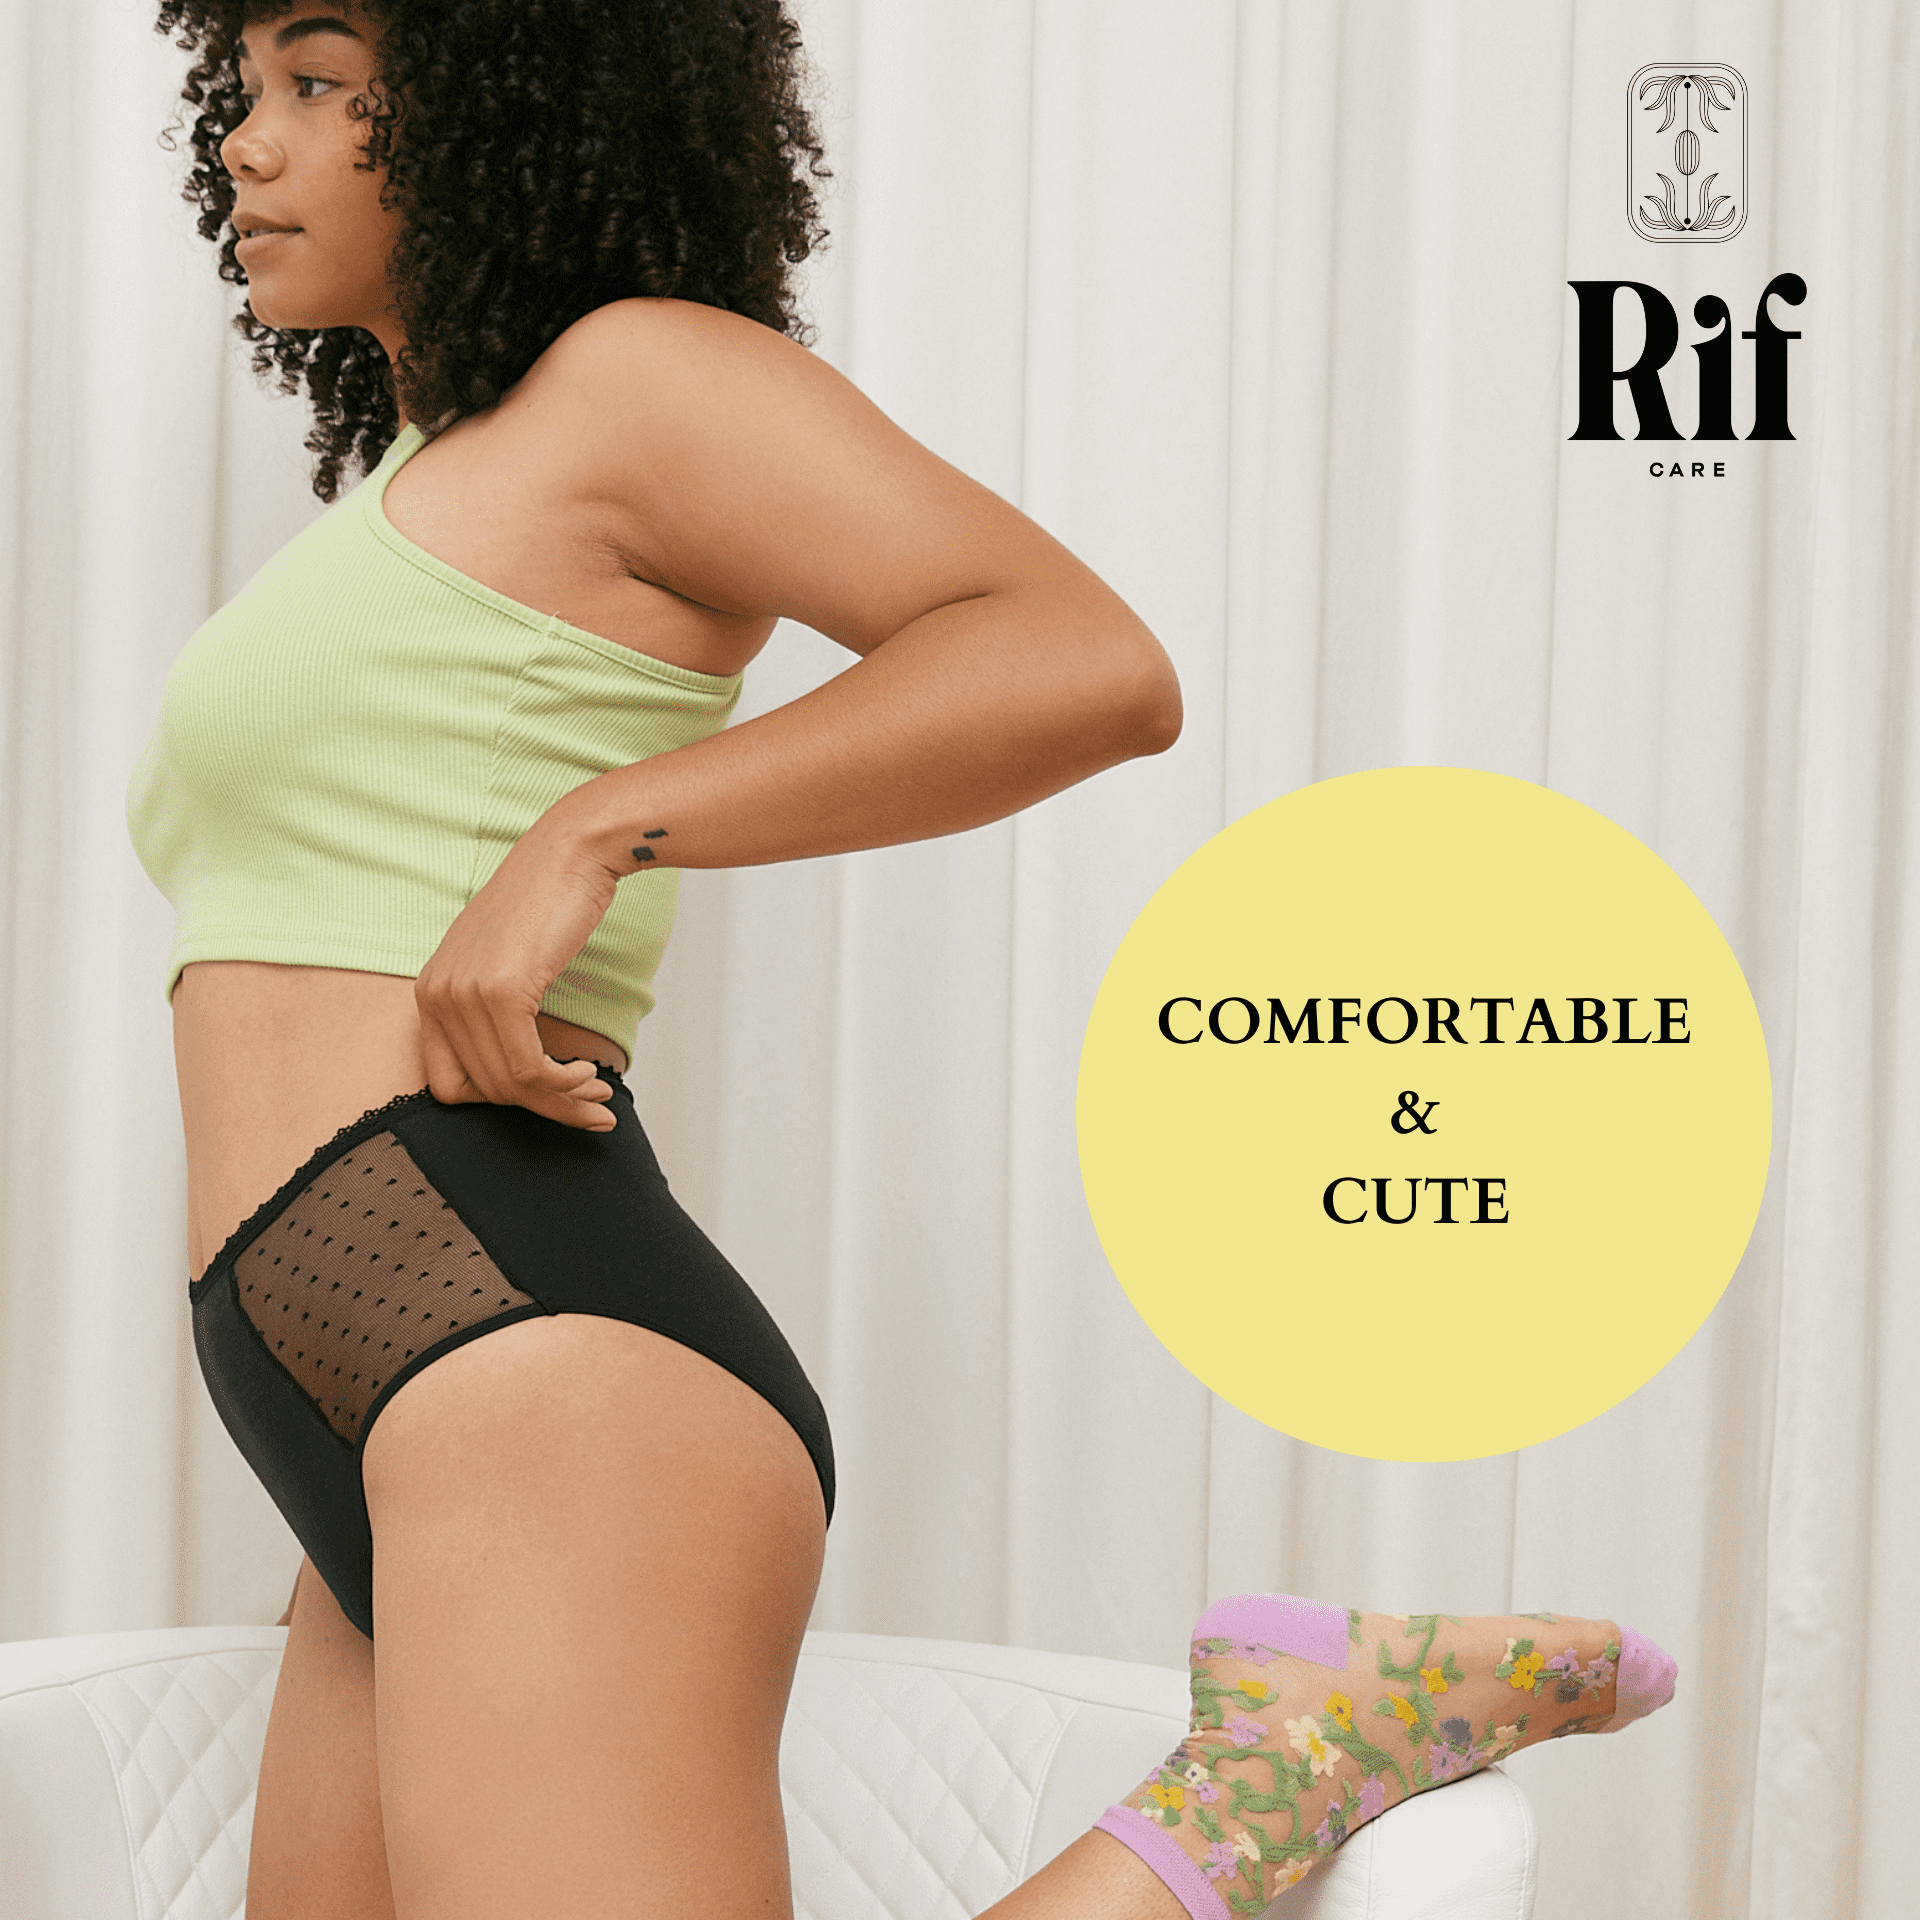 Rif Care, Period Underwear, Mid-Rise Fit, Super Absorbency, Black, Size  Medium 